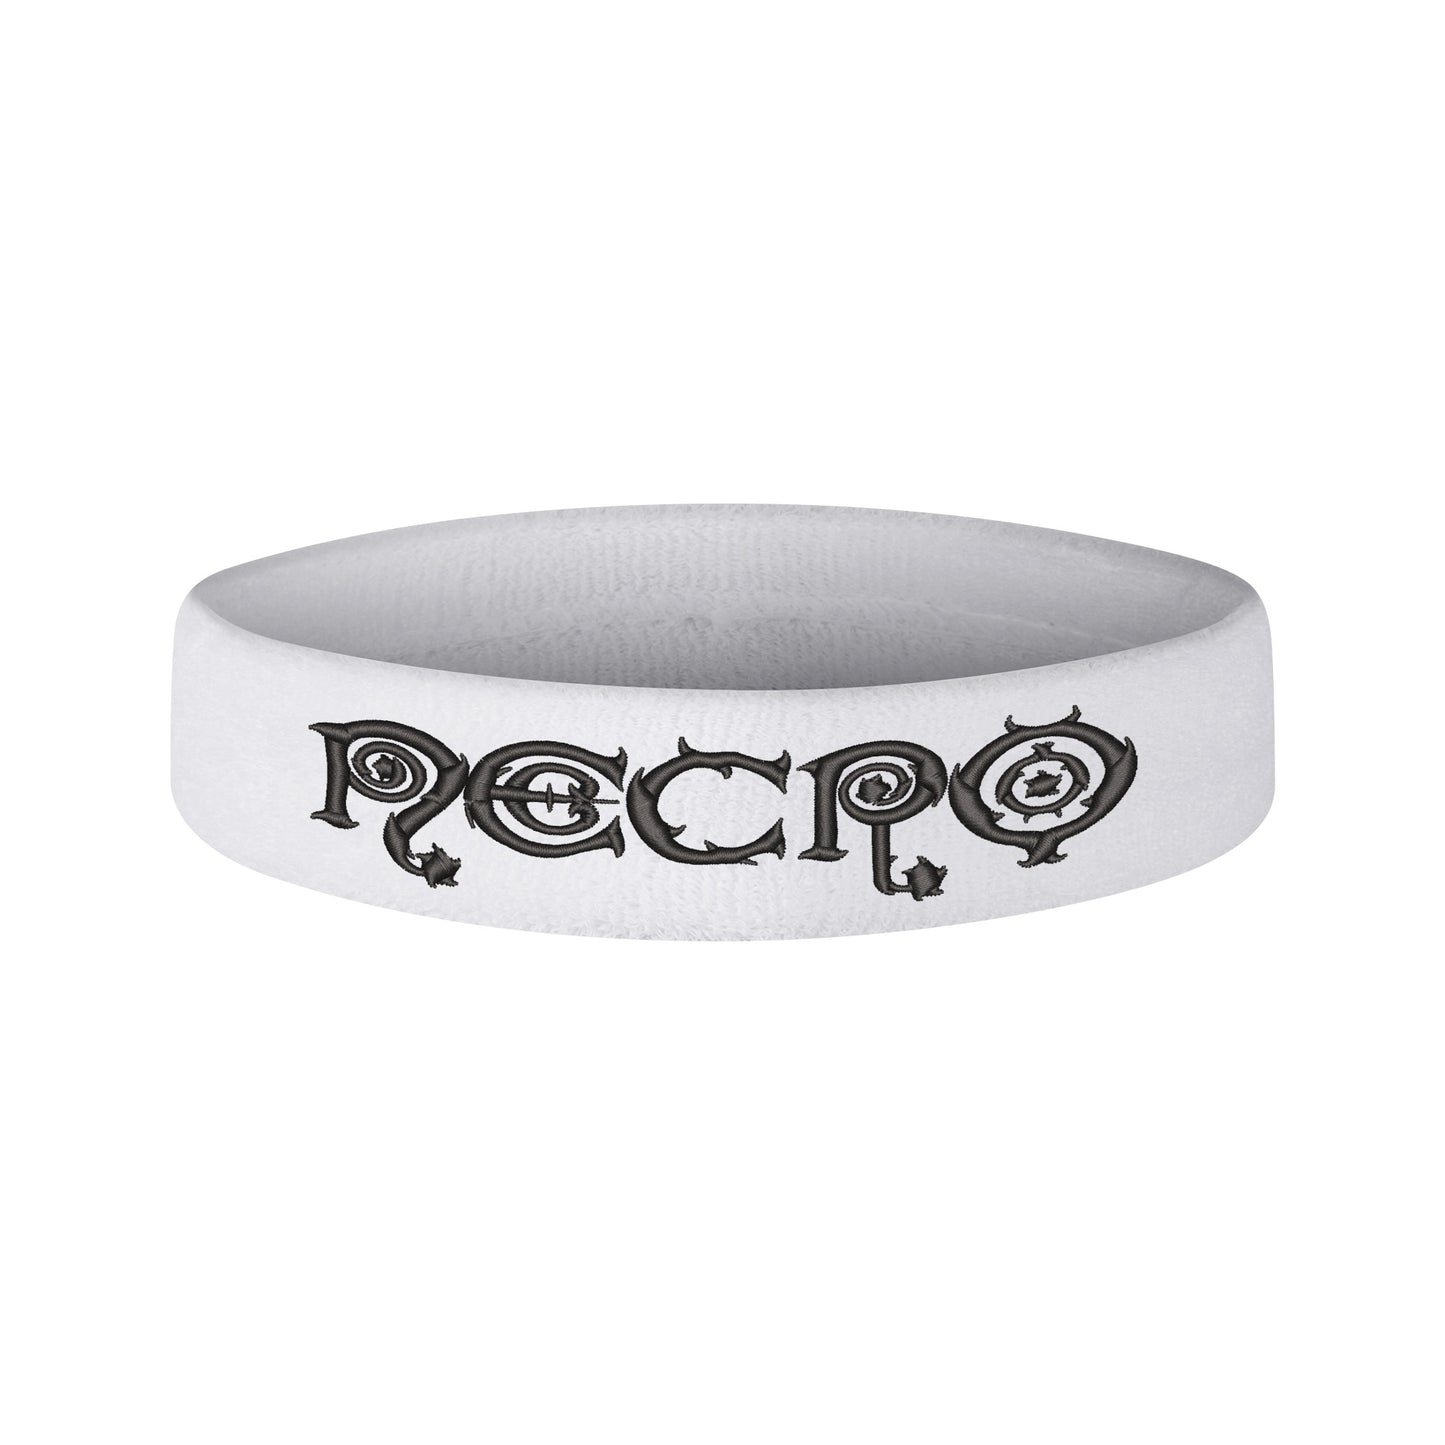 Necro - Logo - Embroidered Sports Headband